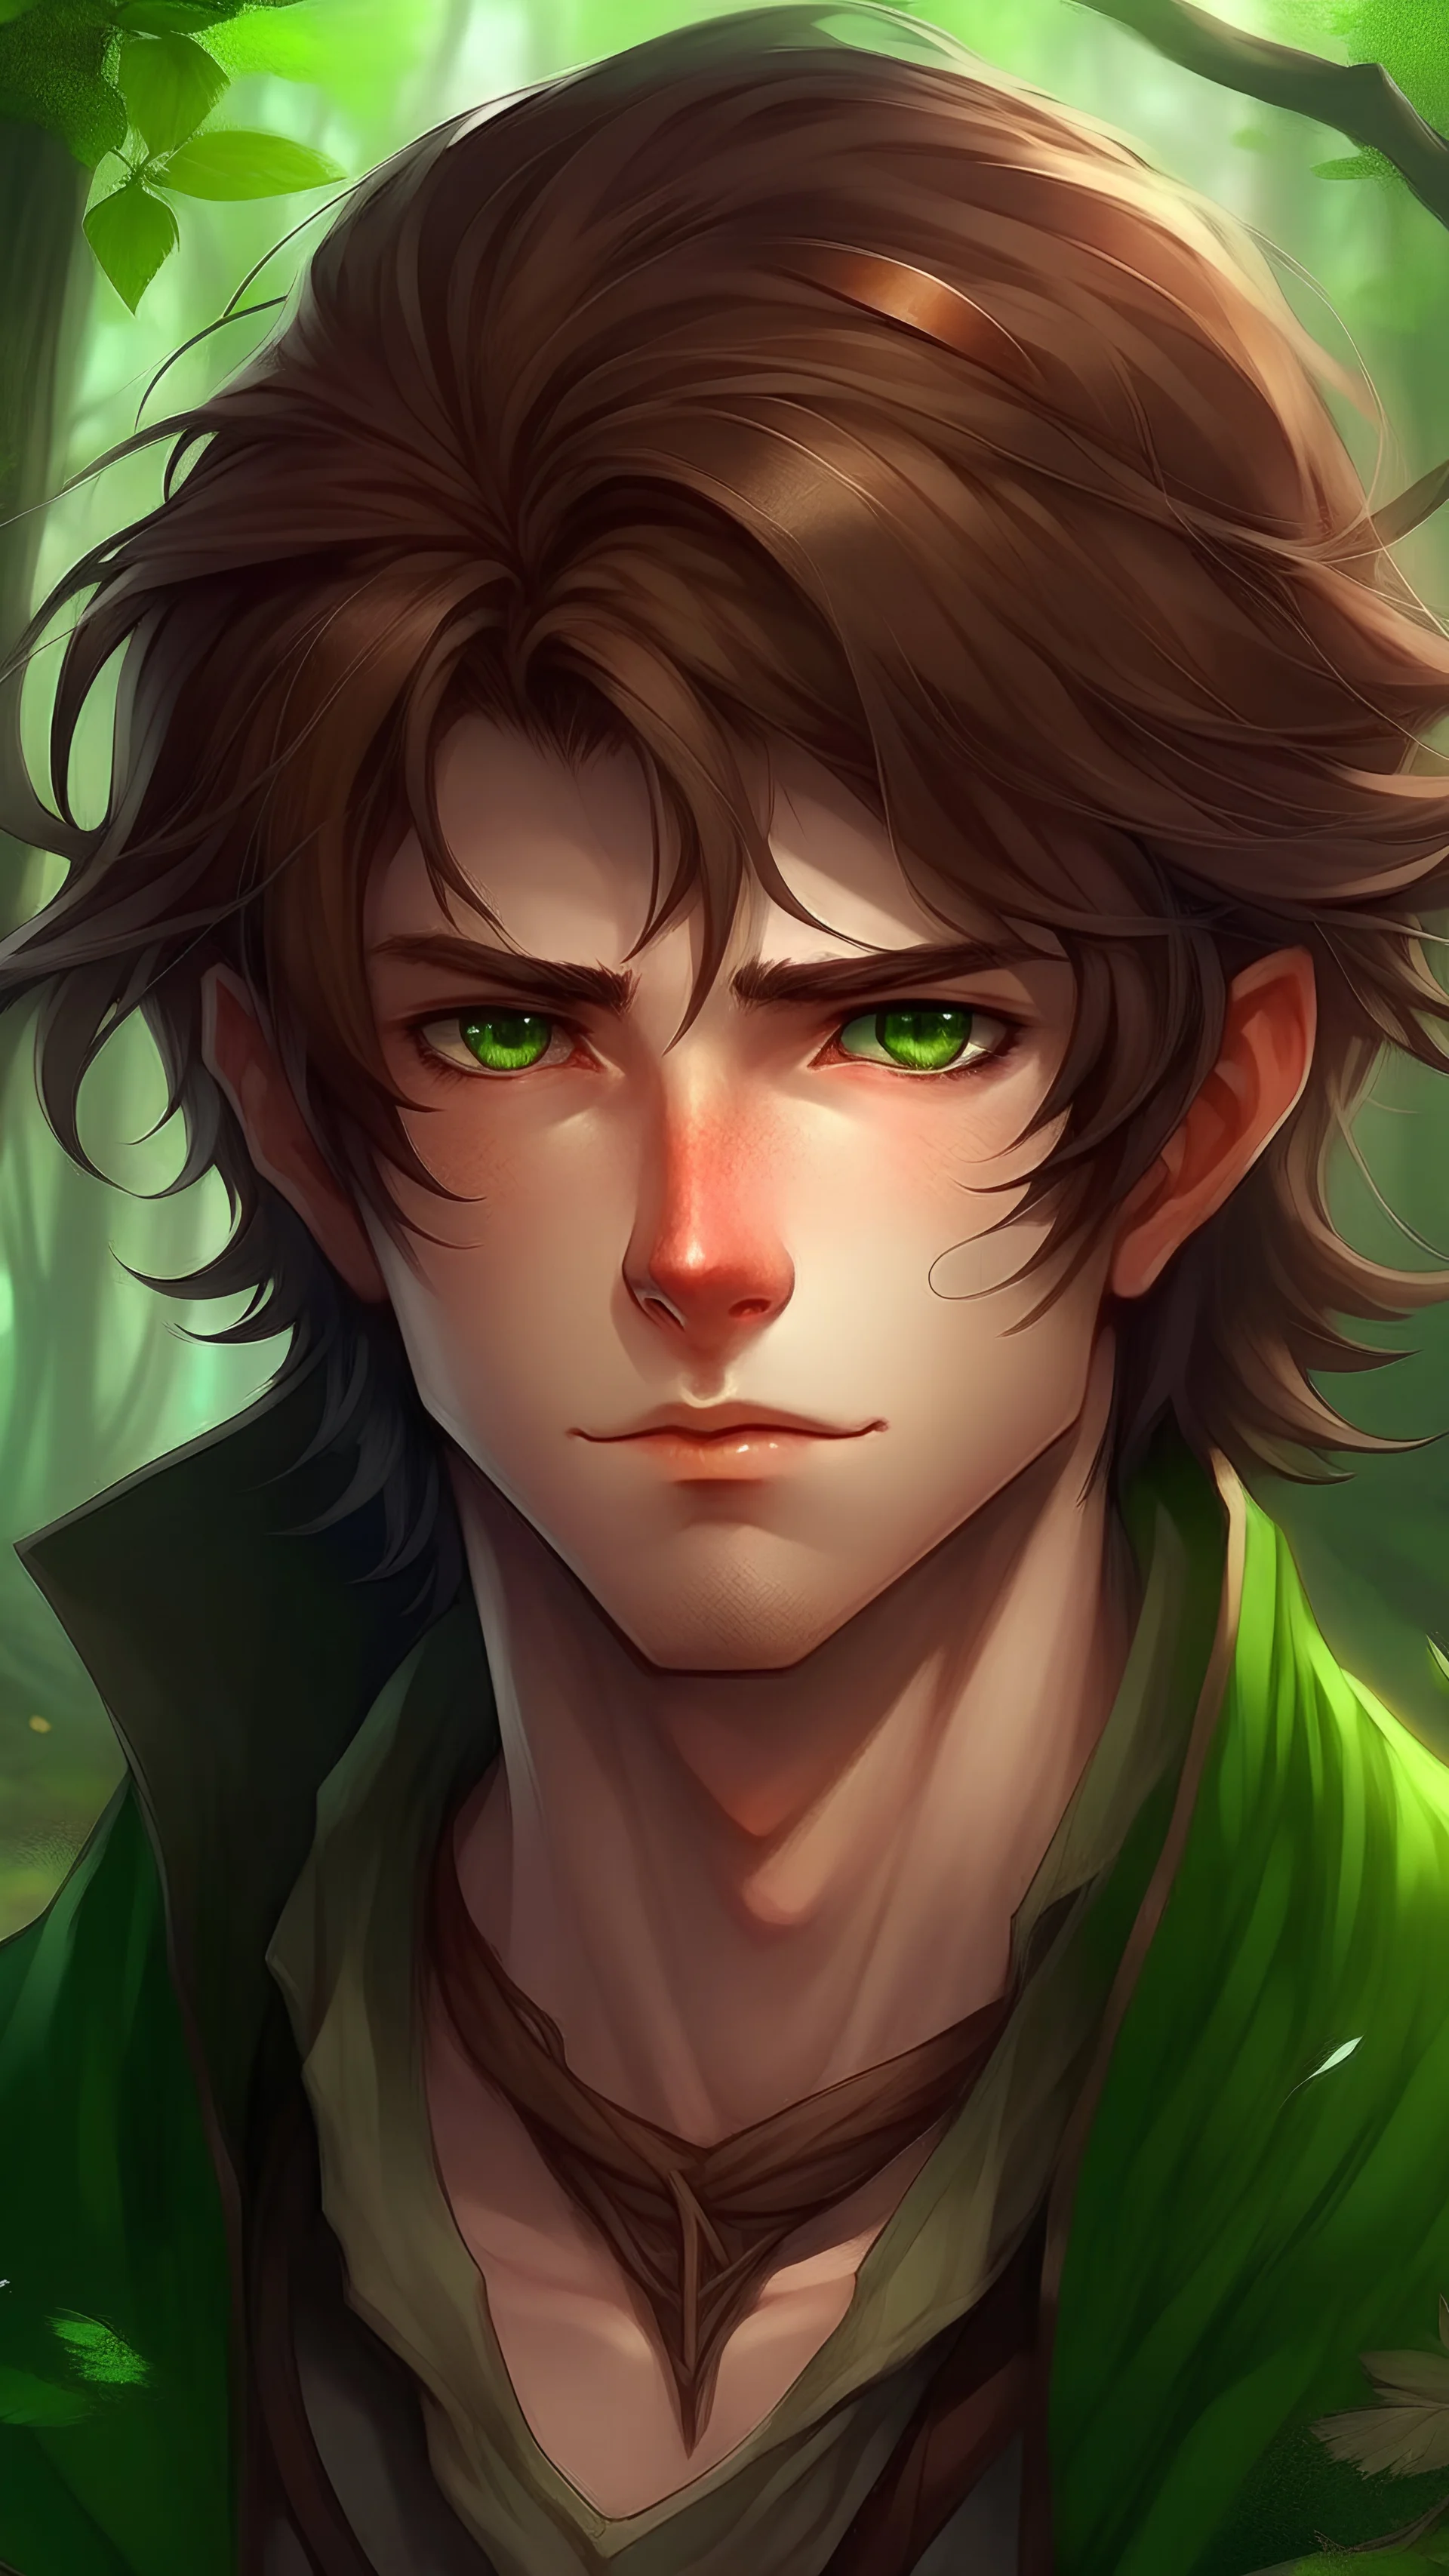 fantasy world, anime, half-elf 21 years old, man, brown messy hair , green eyes